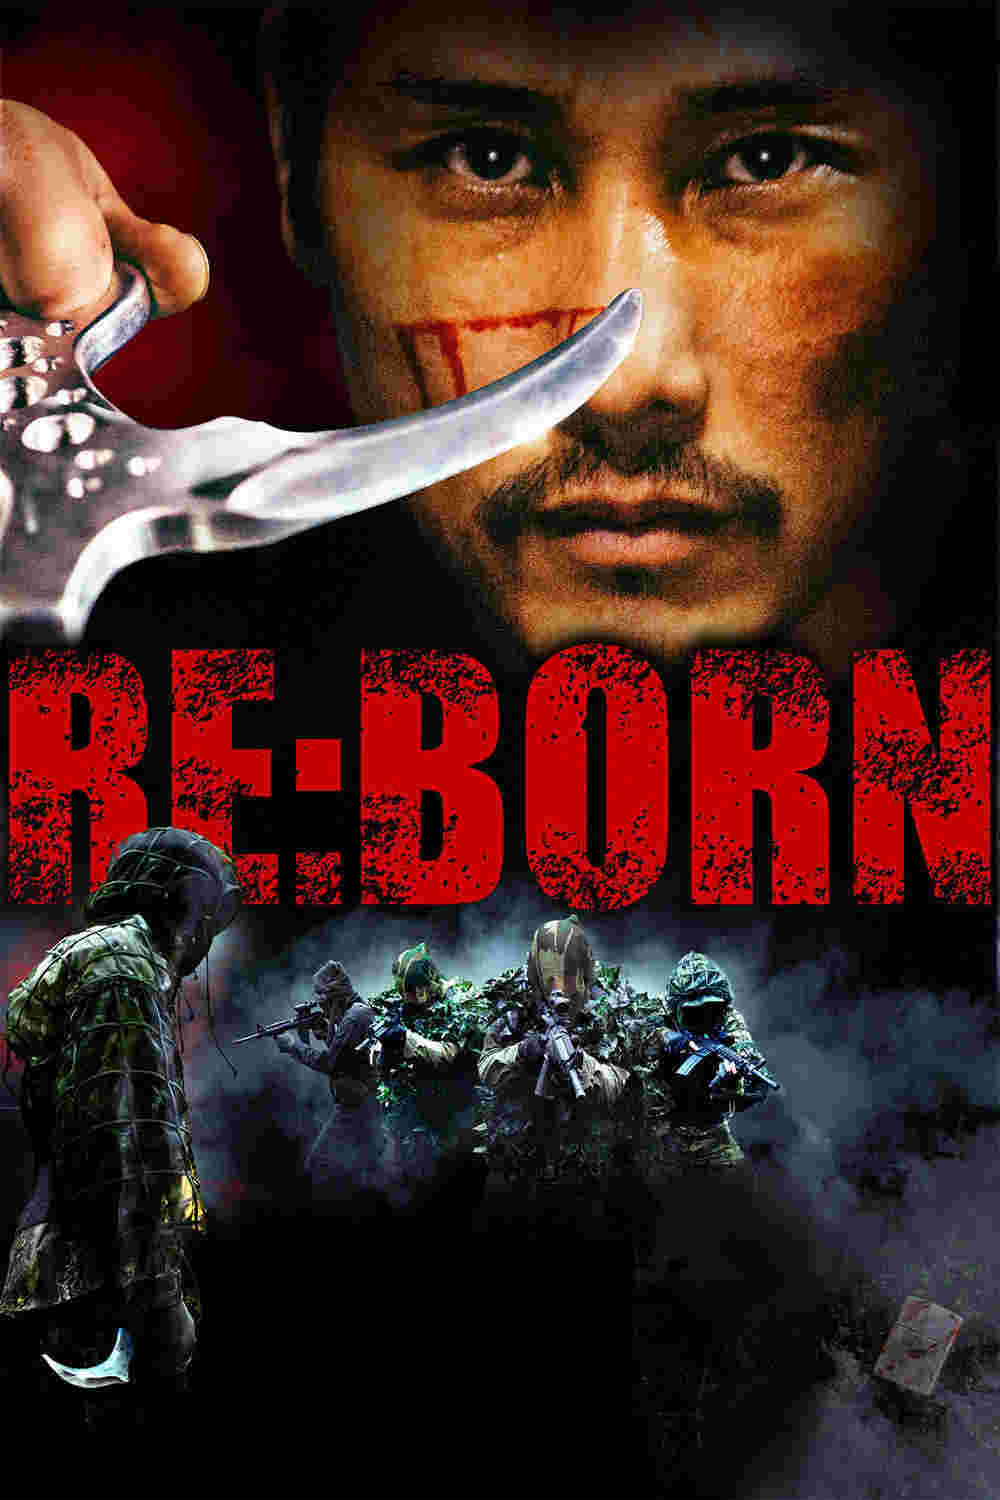 Re: Born (2016) Tak Sakaguchi